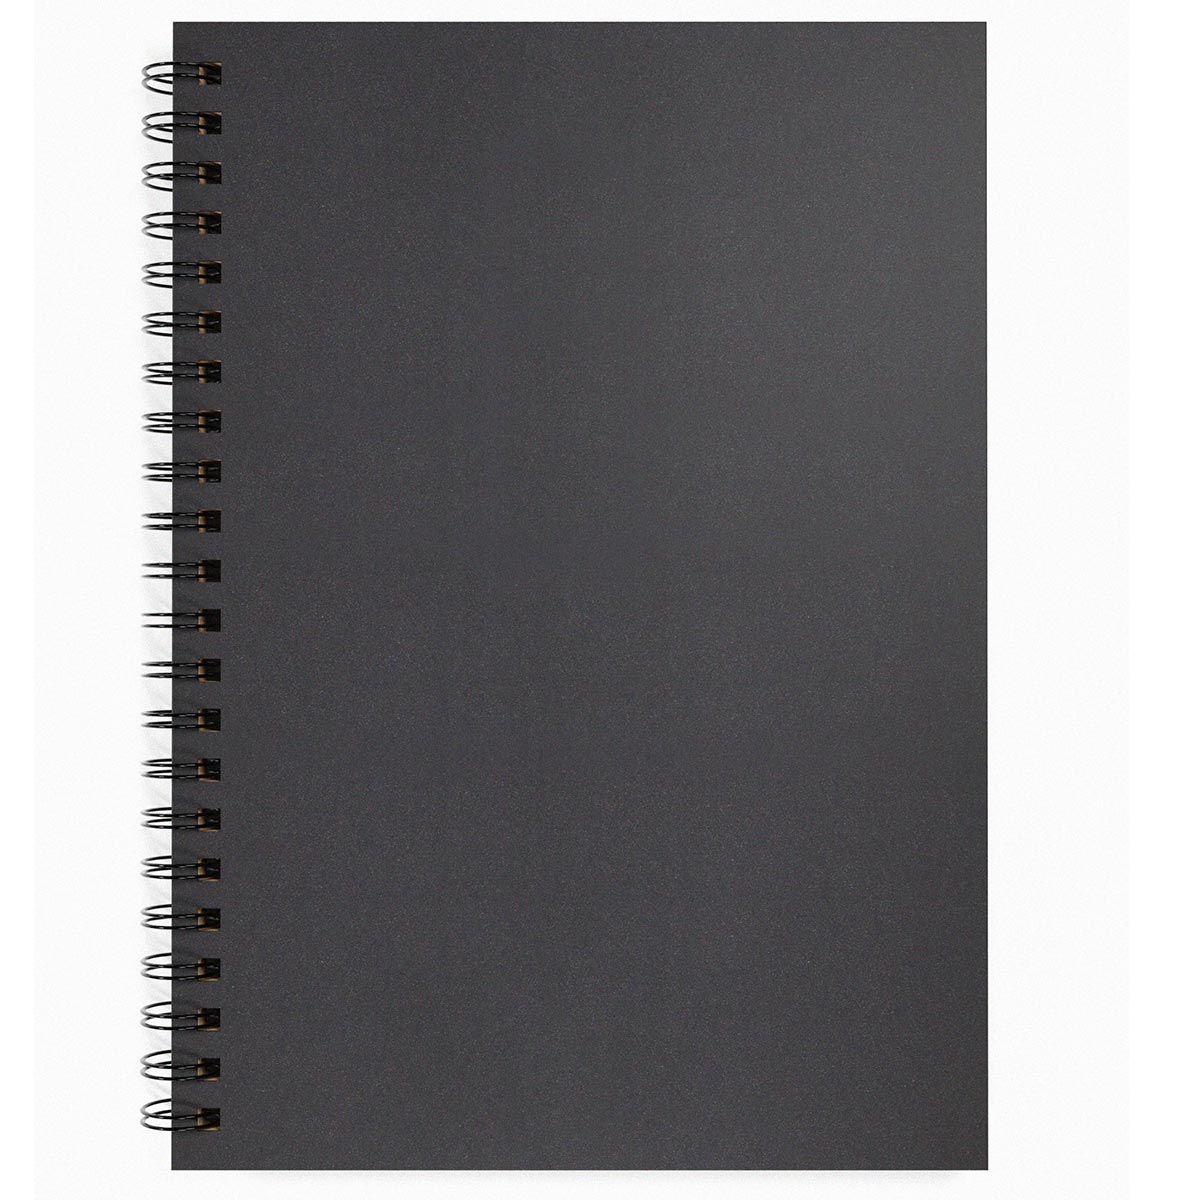 Artgecko - Shady Tan Paper Sketchbook - A4 Portret